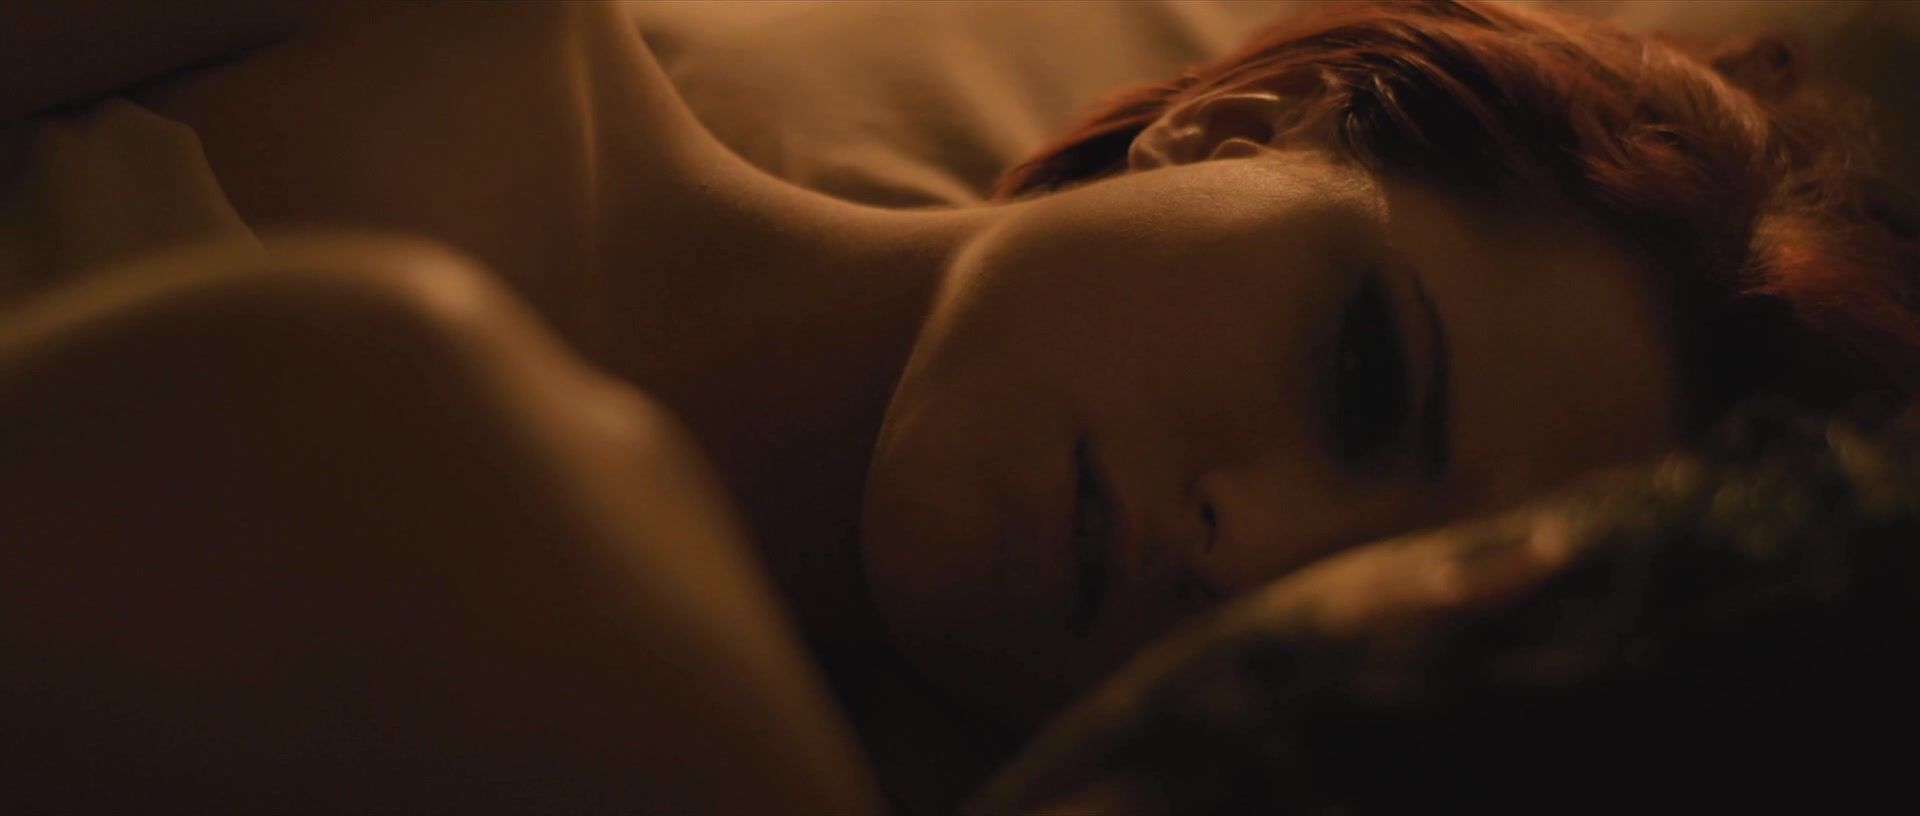 Topless Evan Rachel Wood nude - The Necessary Death of Charlie Countryman (2013) GirlfriendVideos